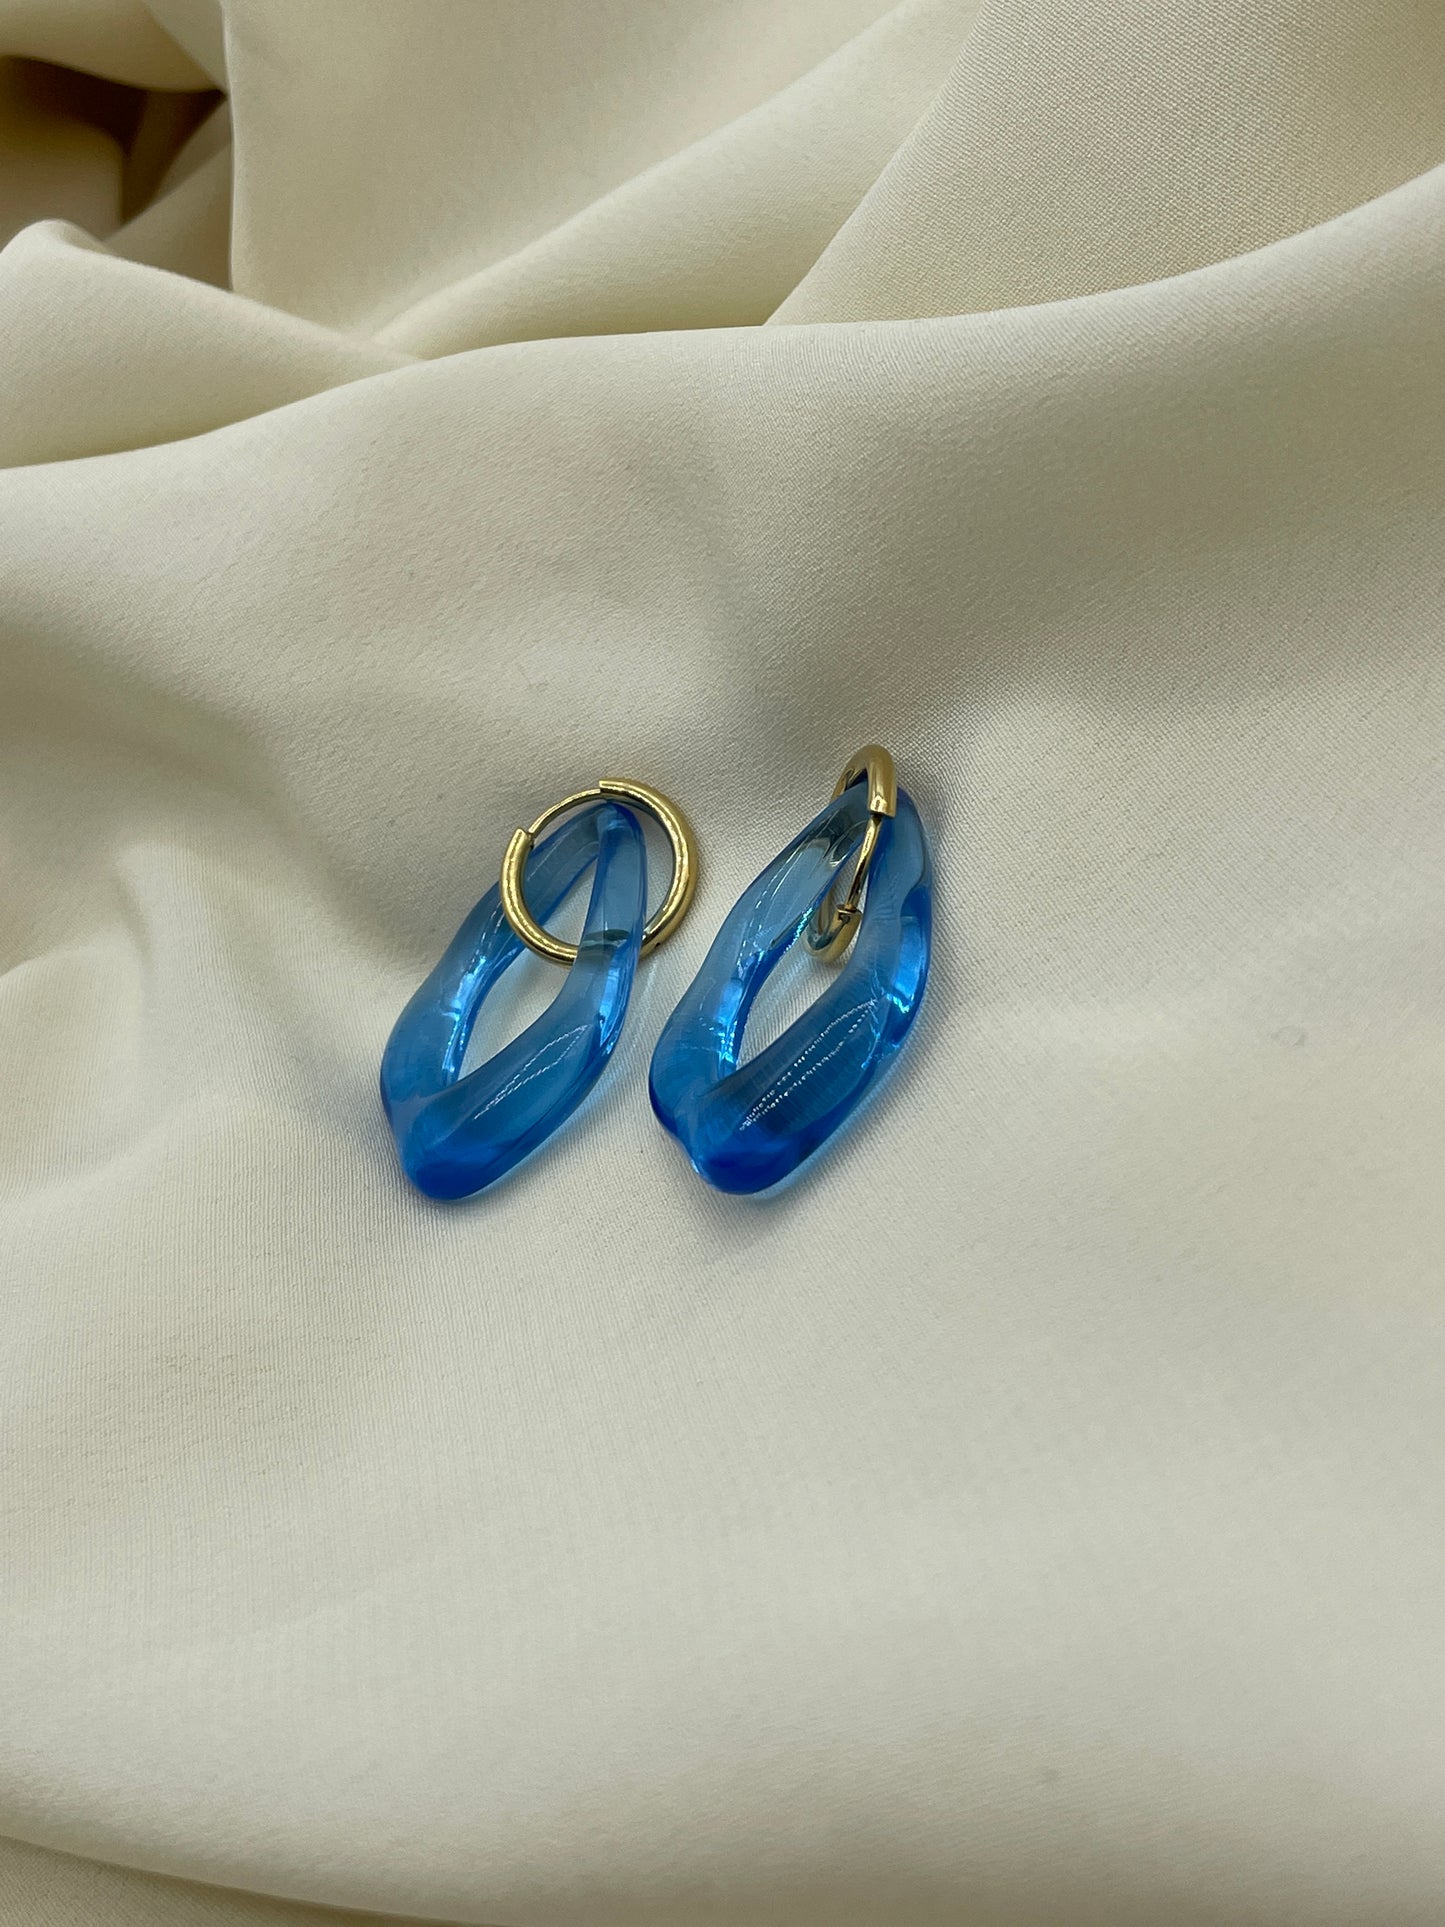 Blue Pendant Earrings Gold